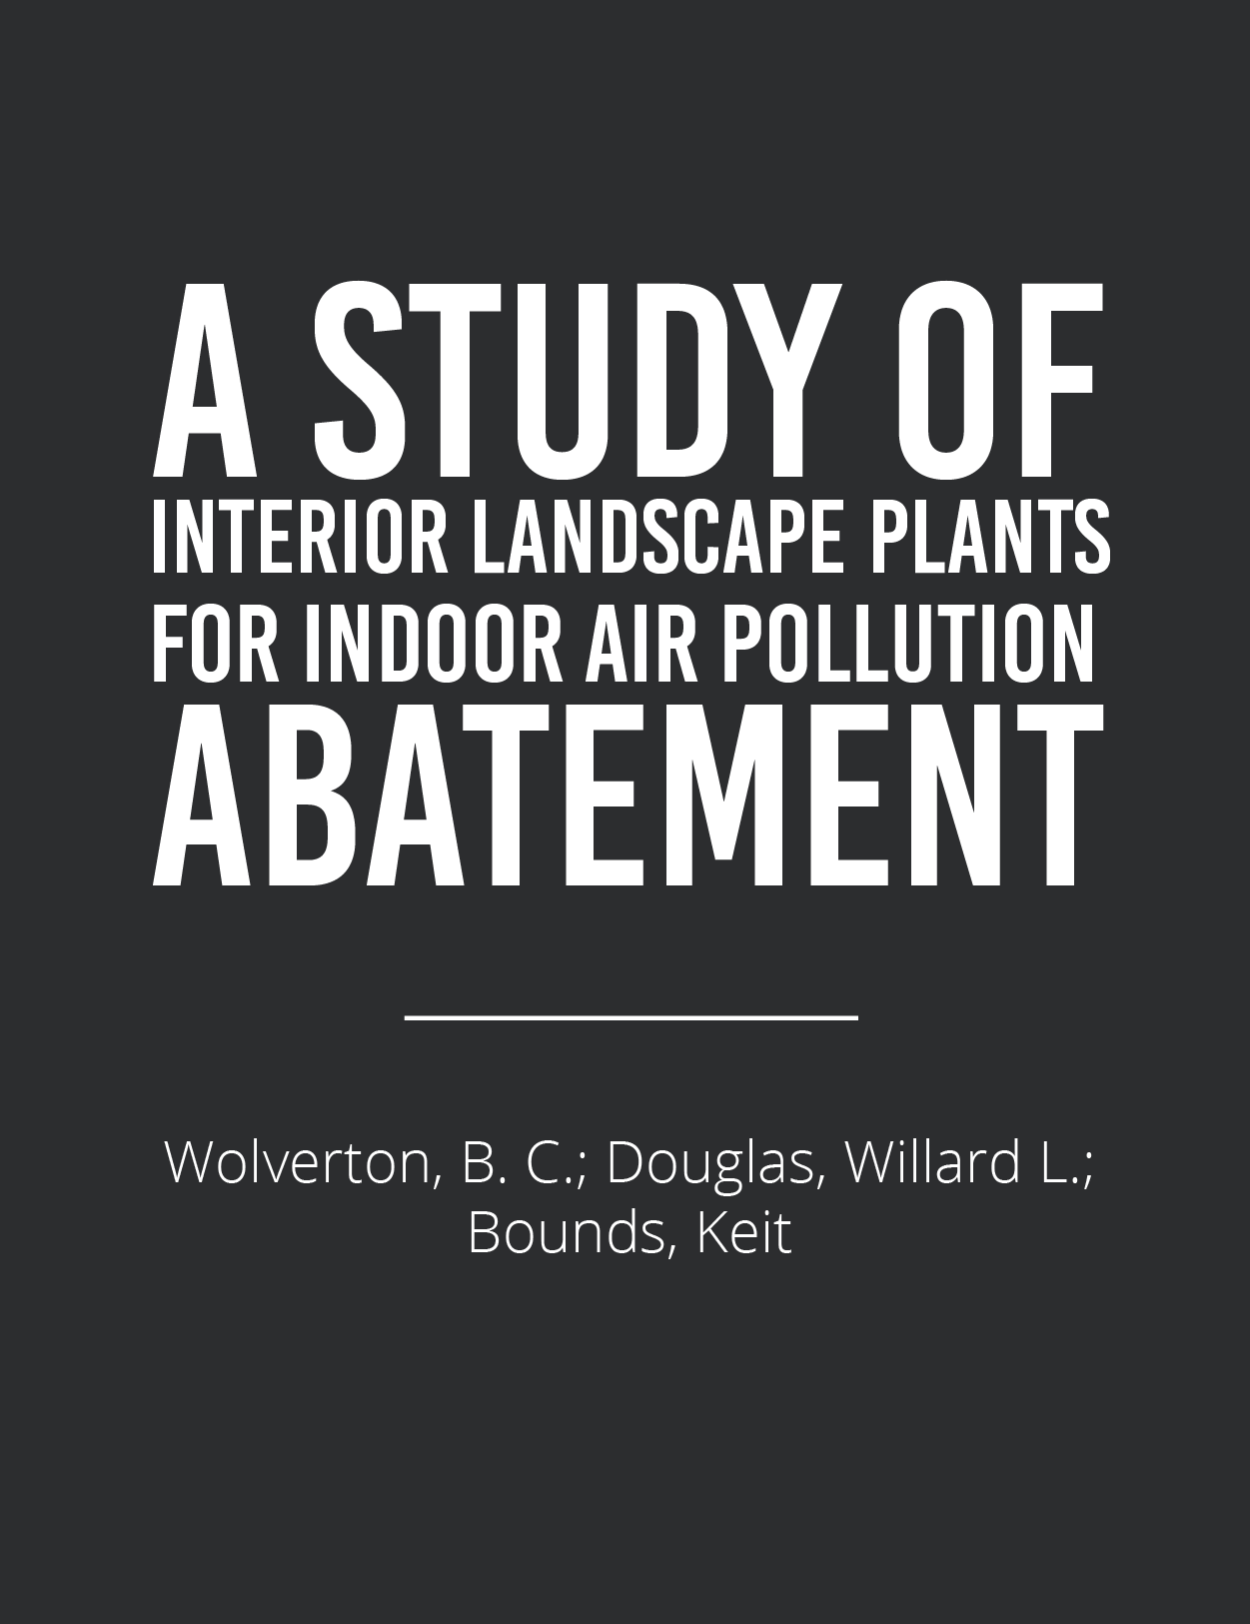 Interior Landscape Plants for Indoor Air AbatementFeatured Image